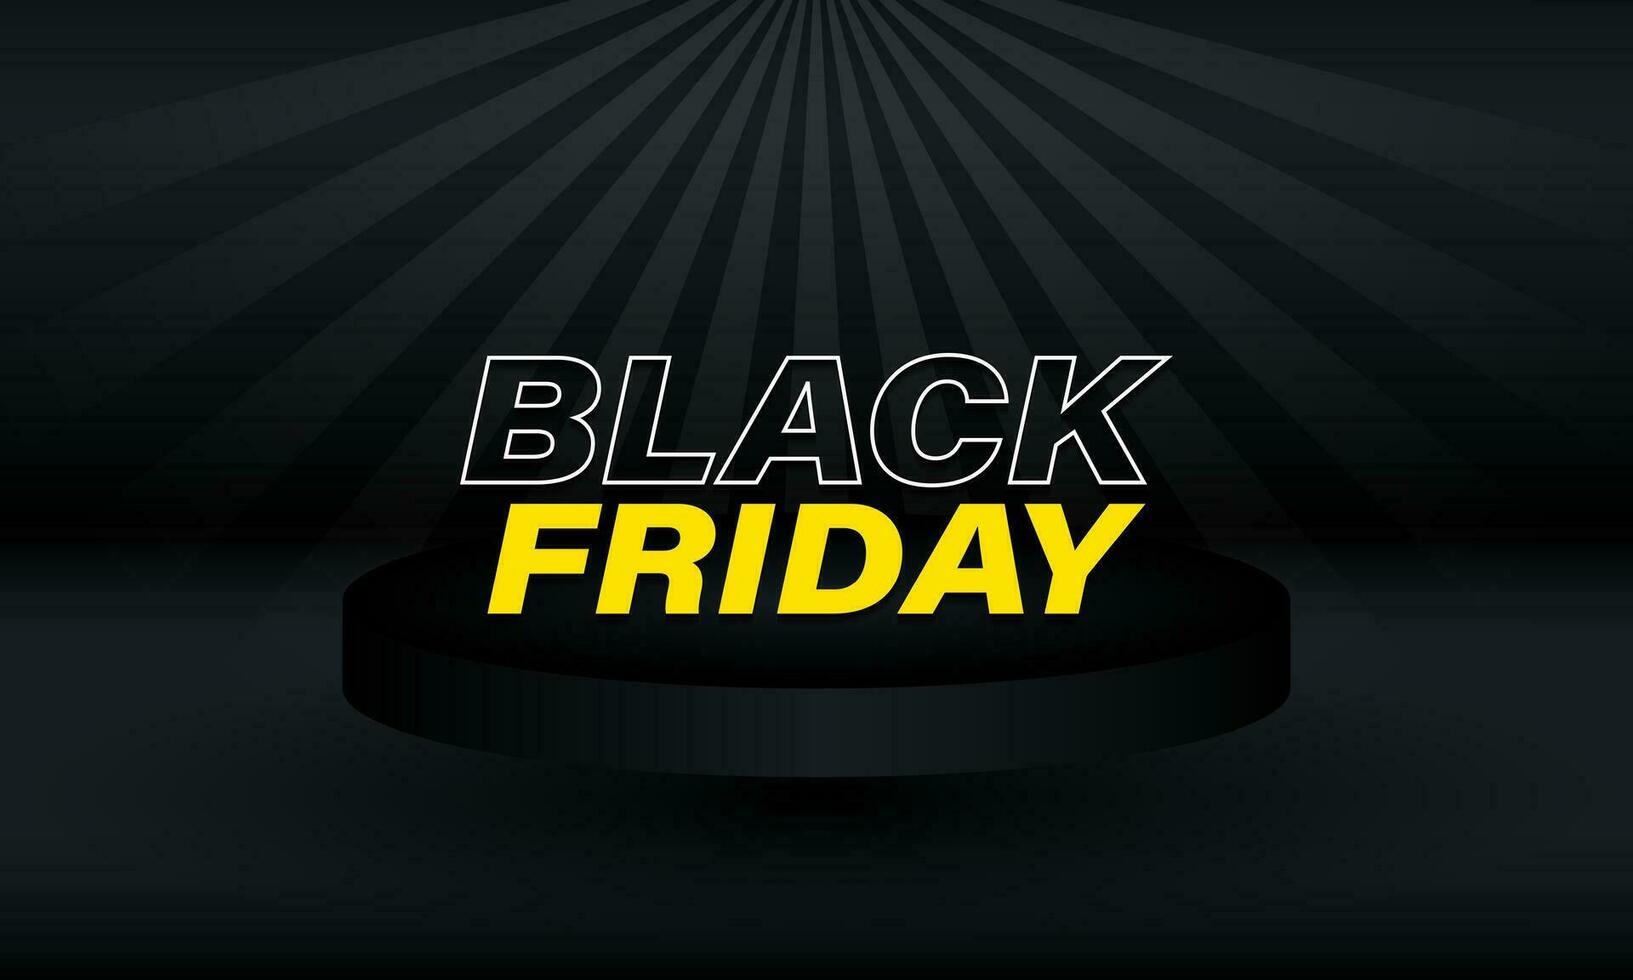 Black Friday Background Design. vector